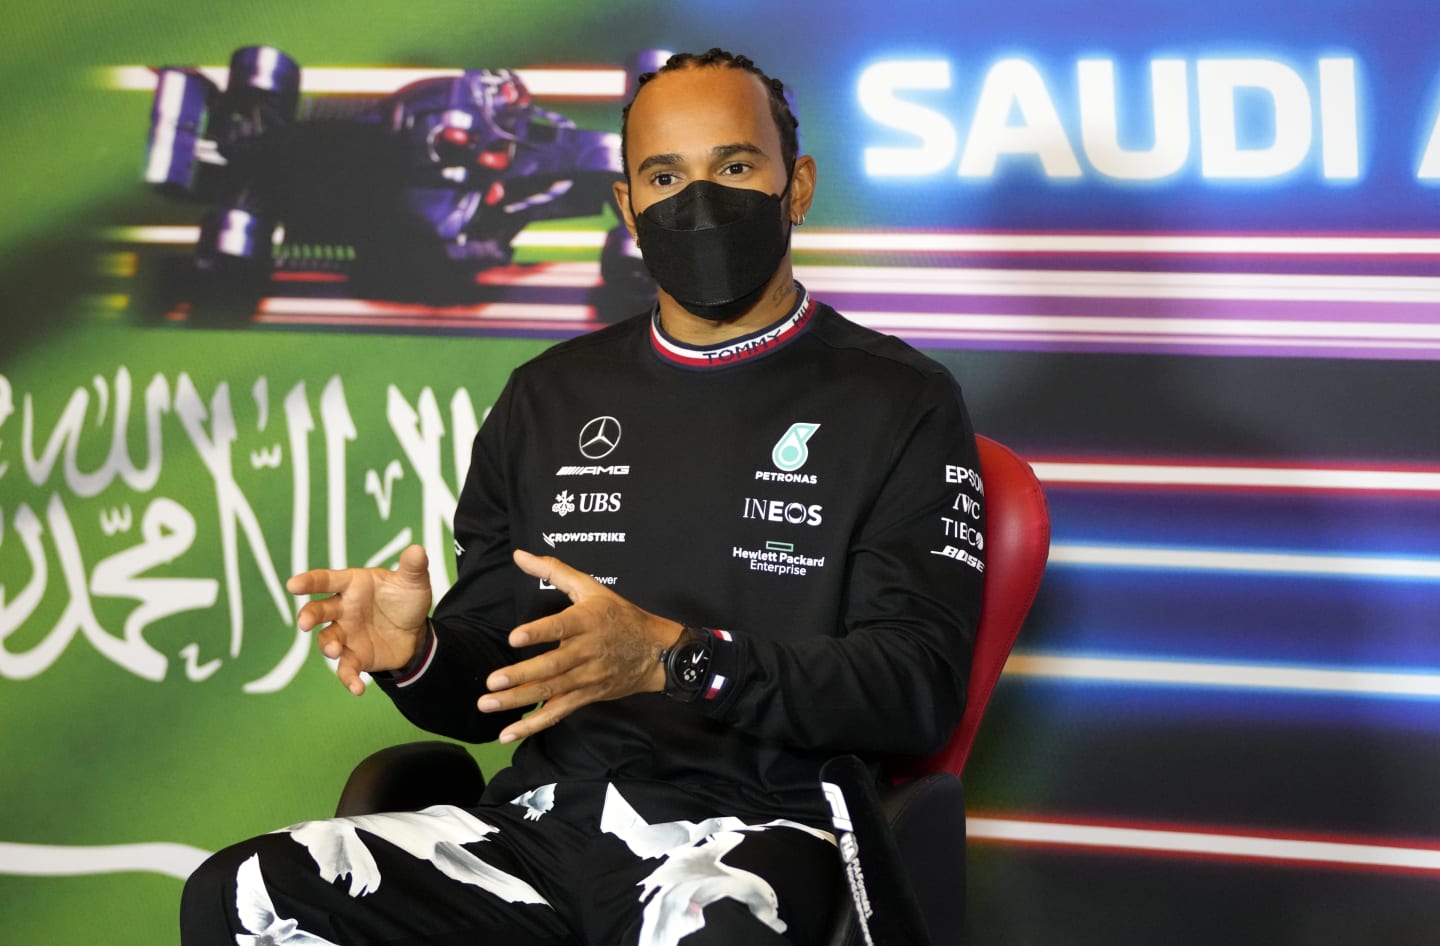 JEDDAH, SAUDI ARABIA - DECEMBER 02: Lewis Hamilton of Great Britain and Mercedes GP talks in the